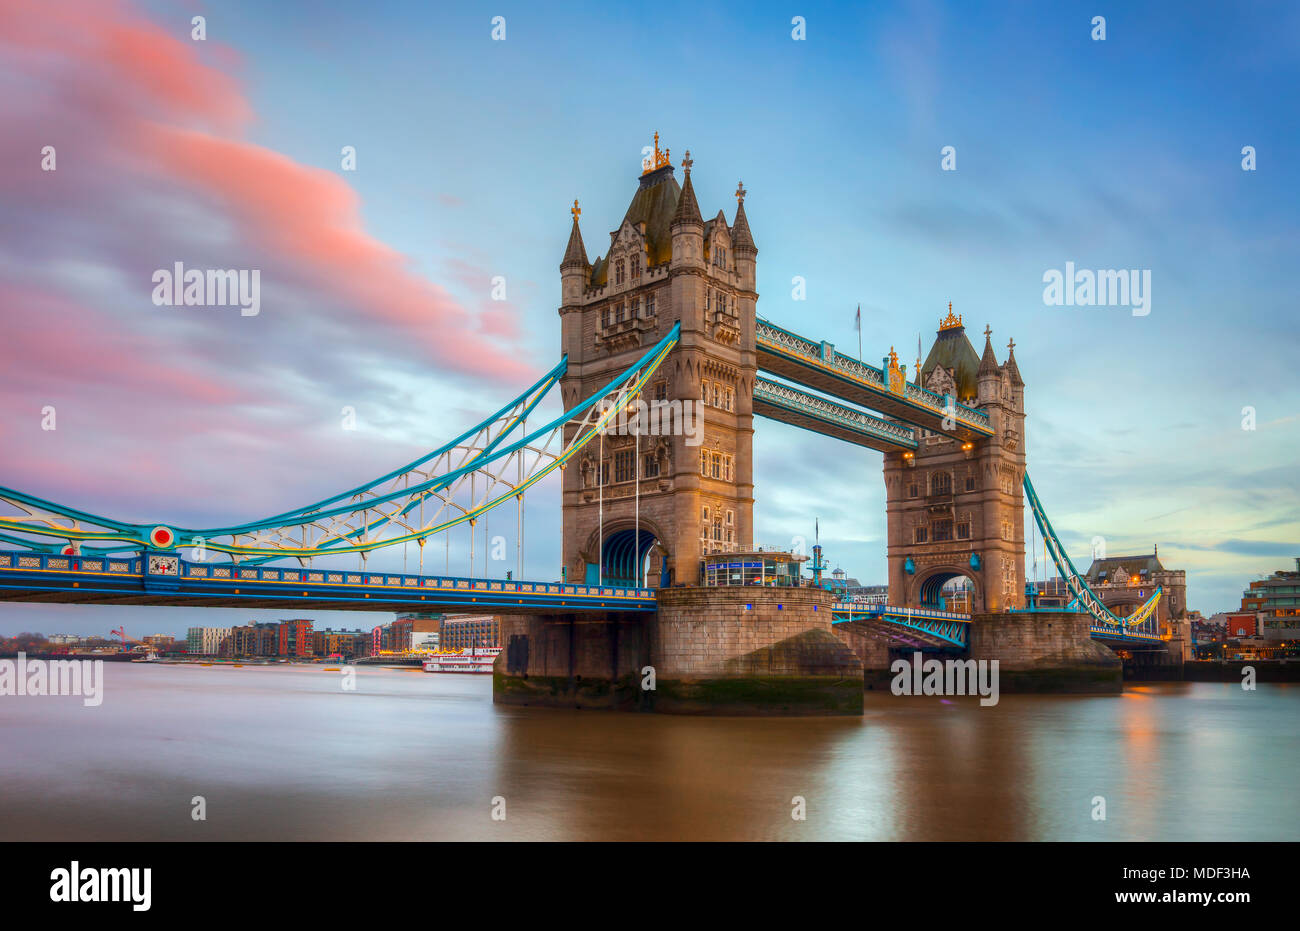 Tower Bridge, a famous landmark in London, England Stock Photo